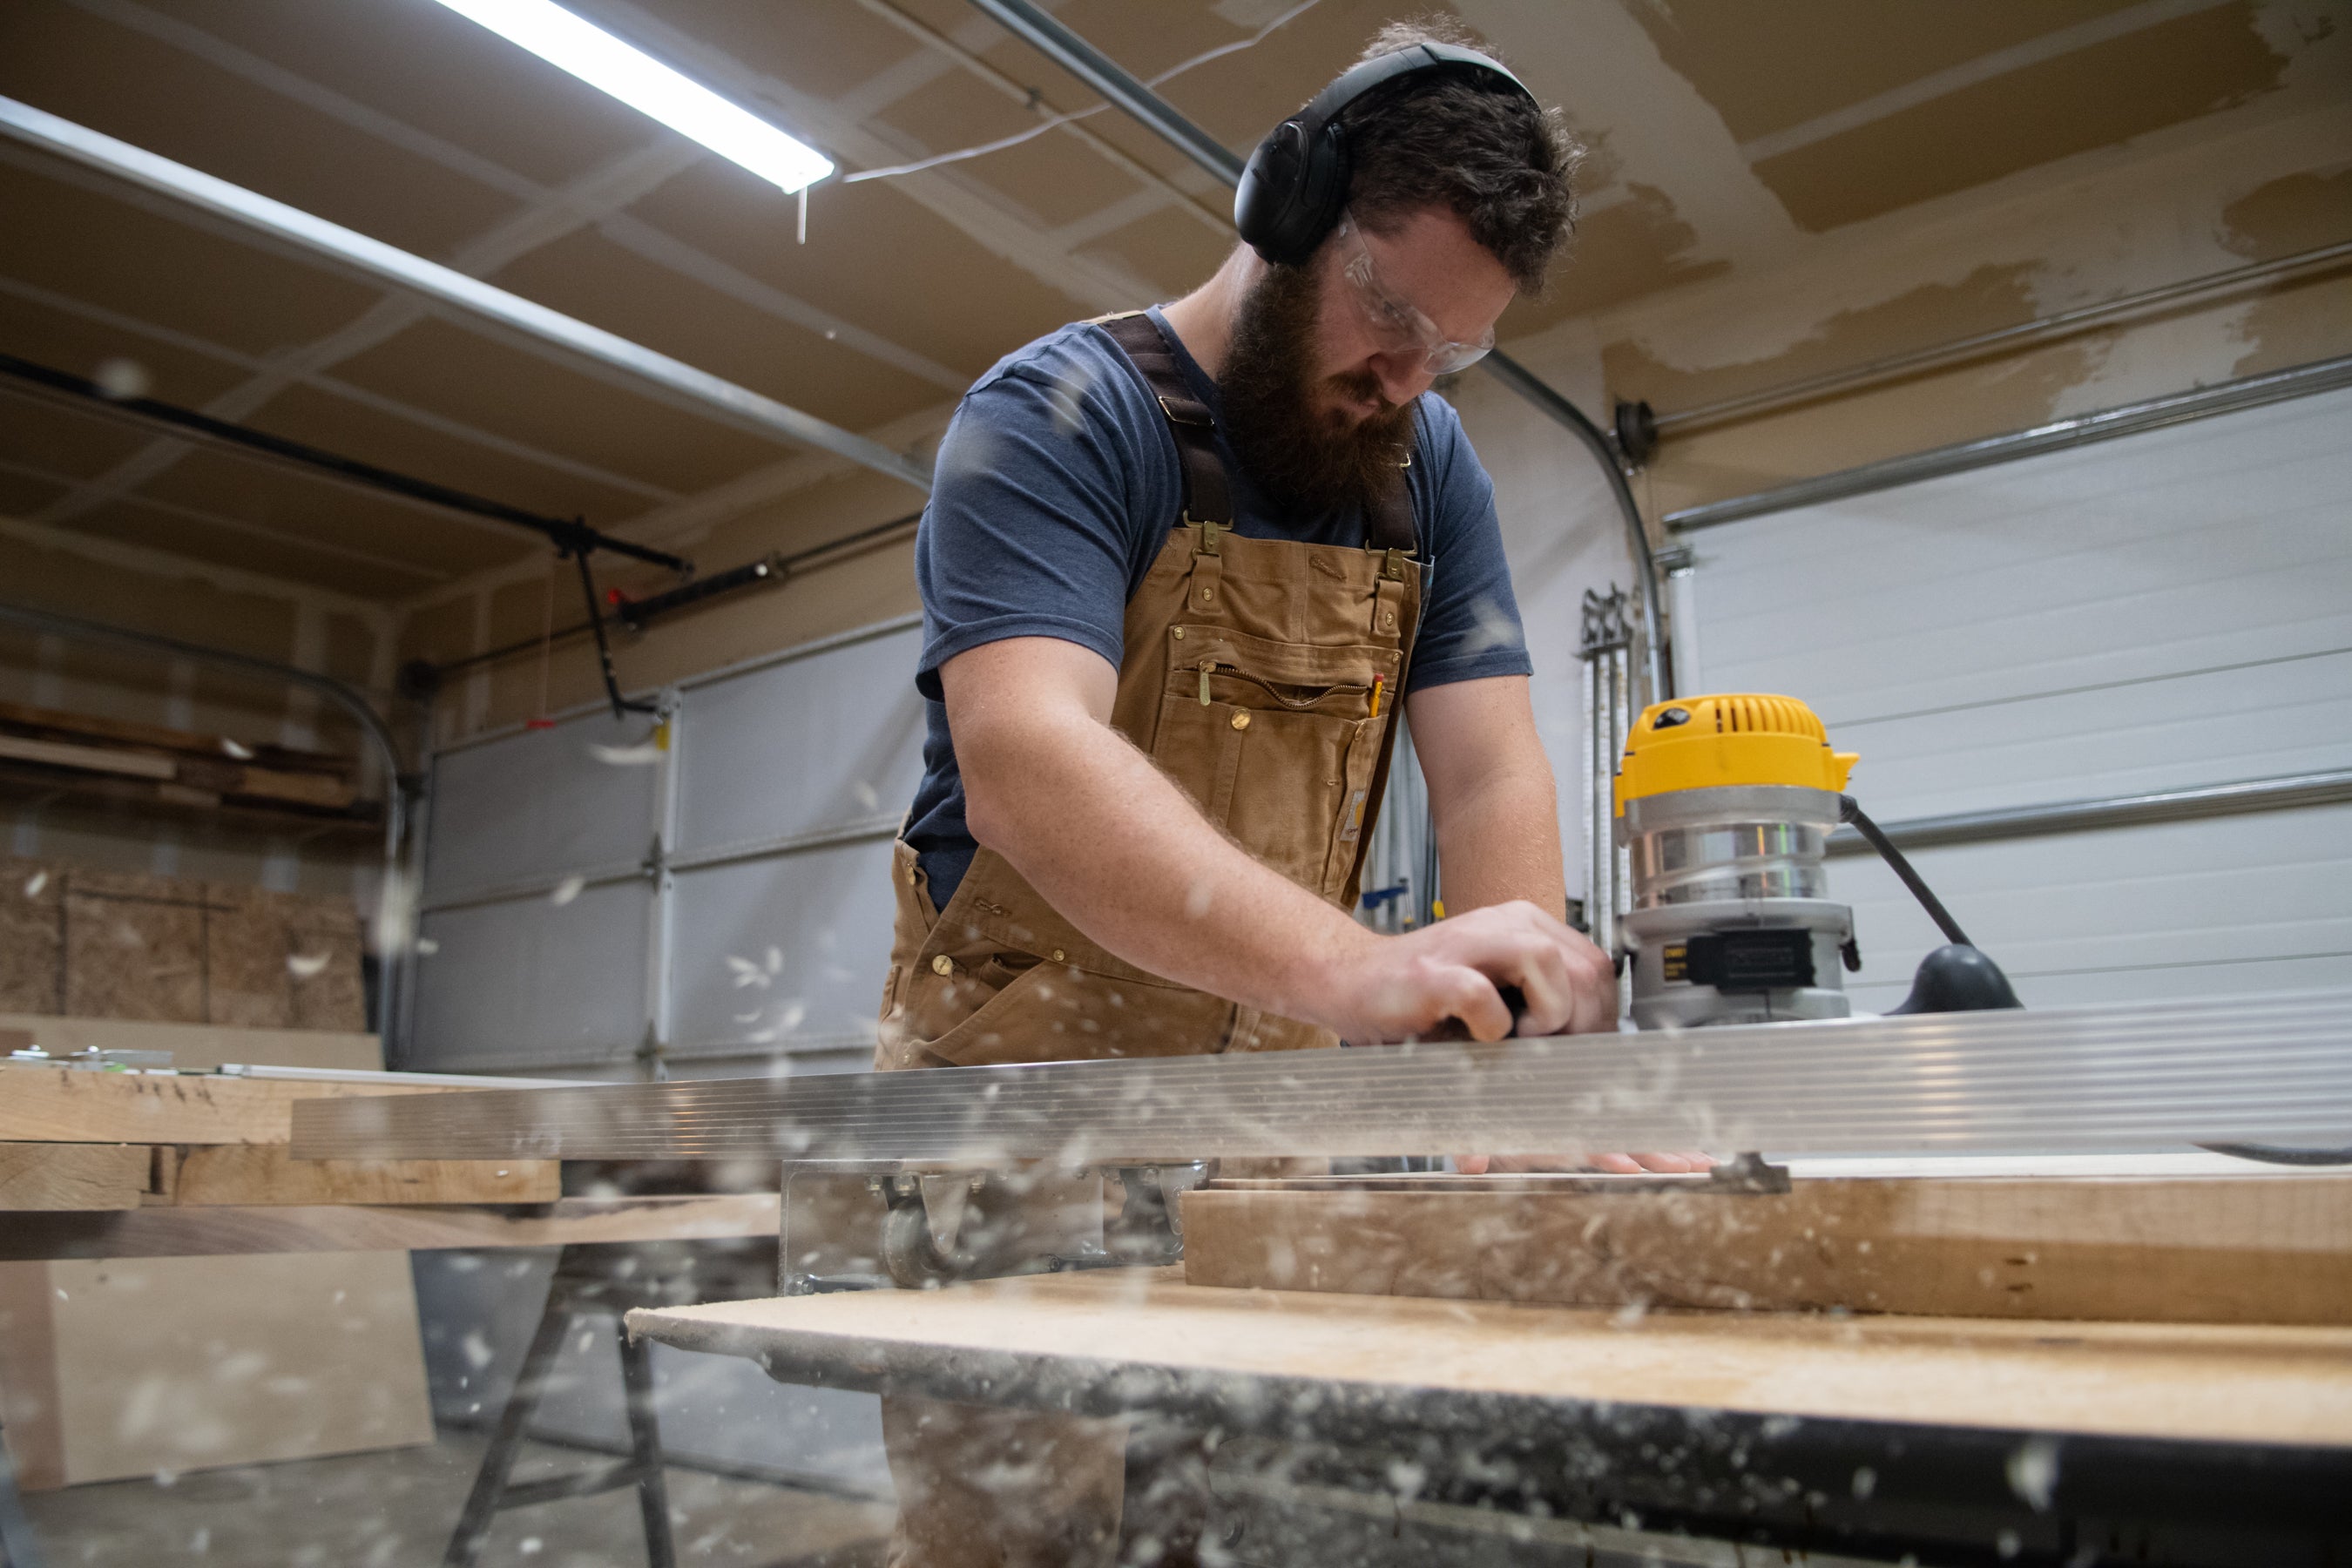 Alex sanding wood in his shop